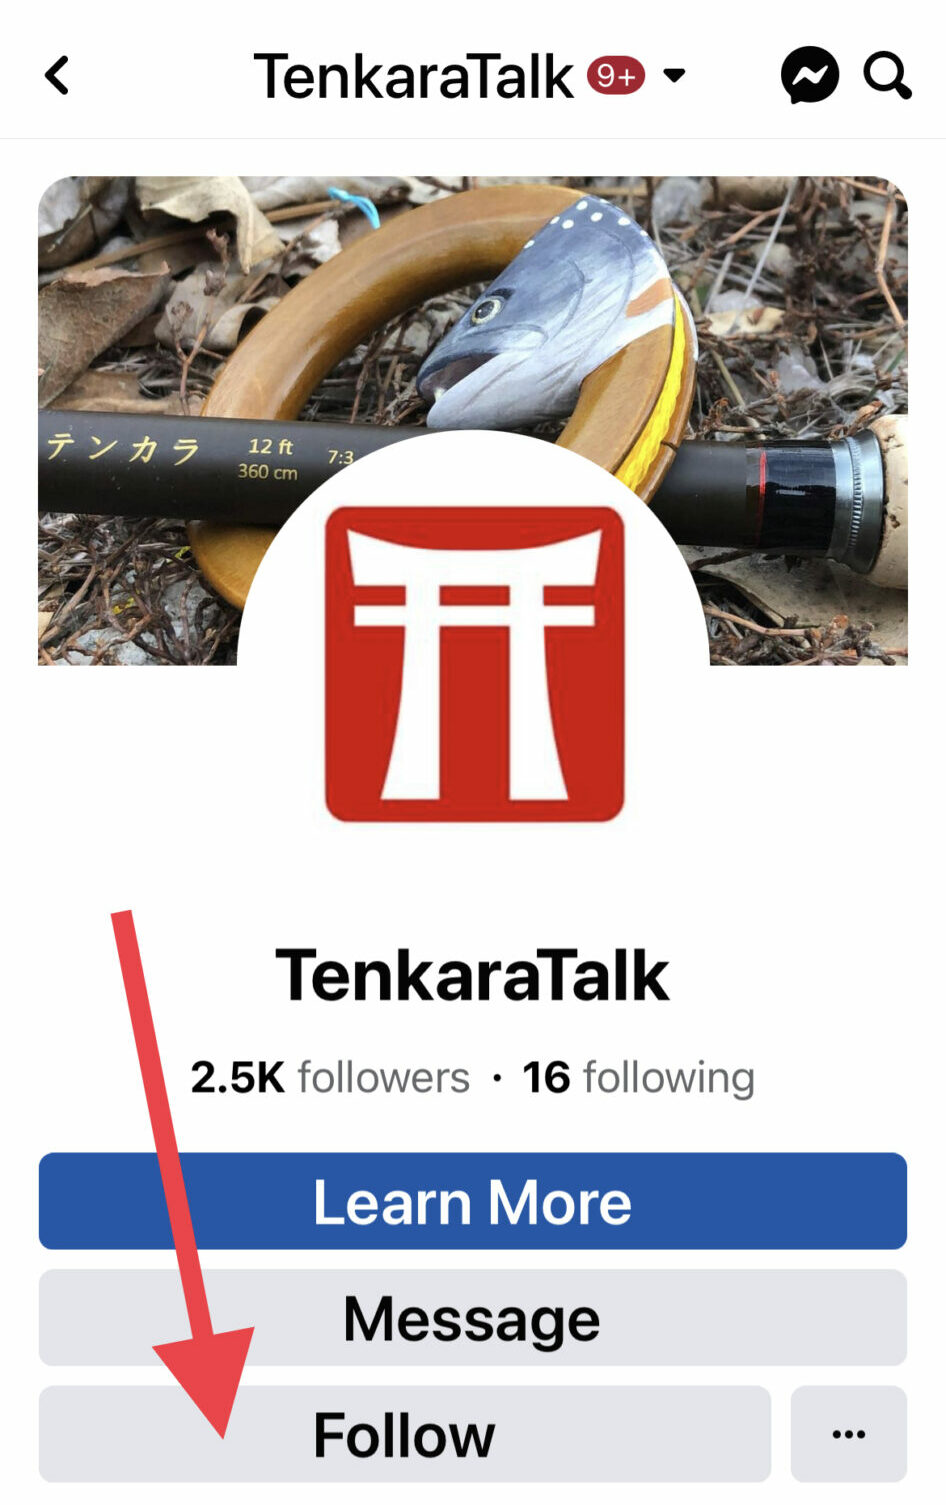 Tenkara Talk